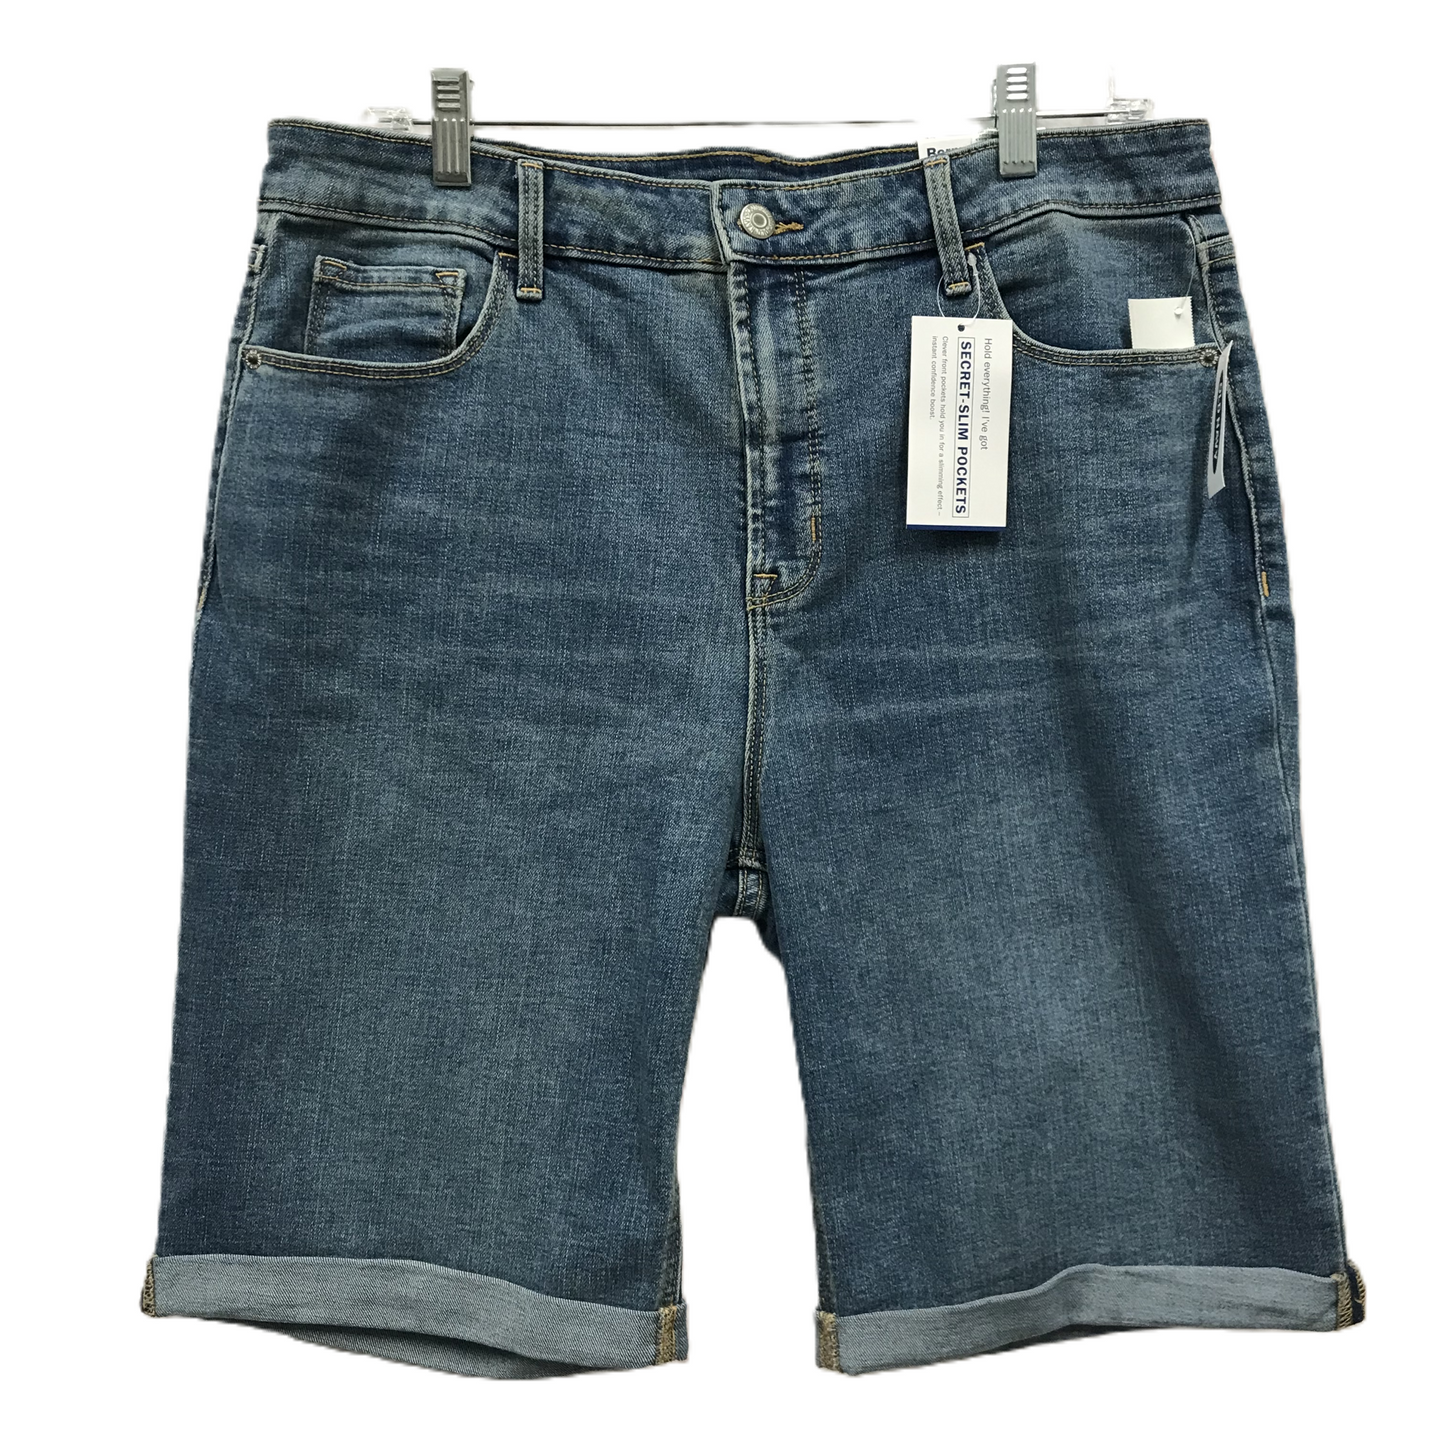 Blue Denim Shorts By Old Navy, Size: 14